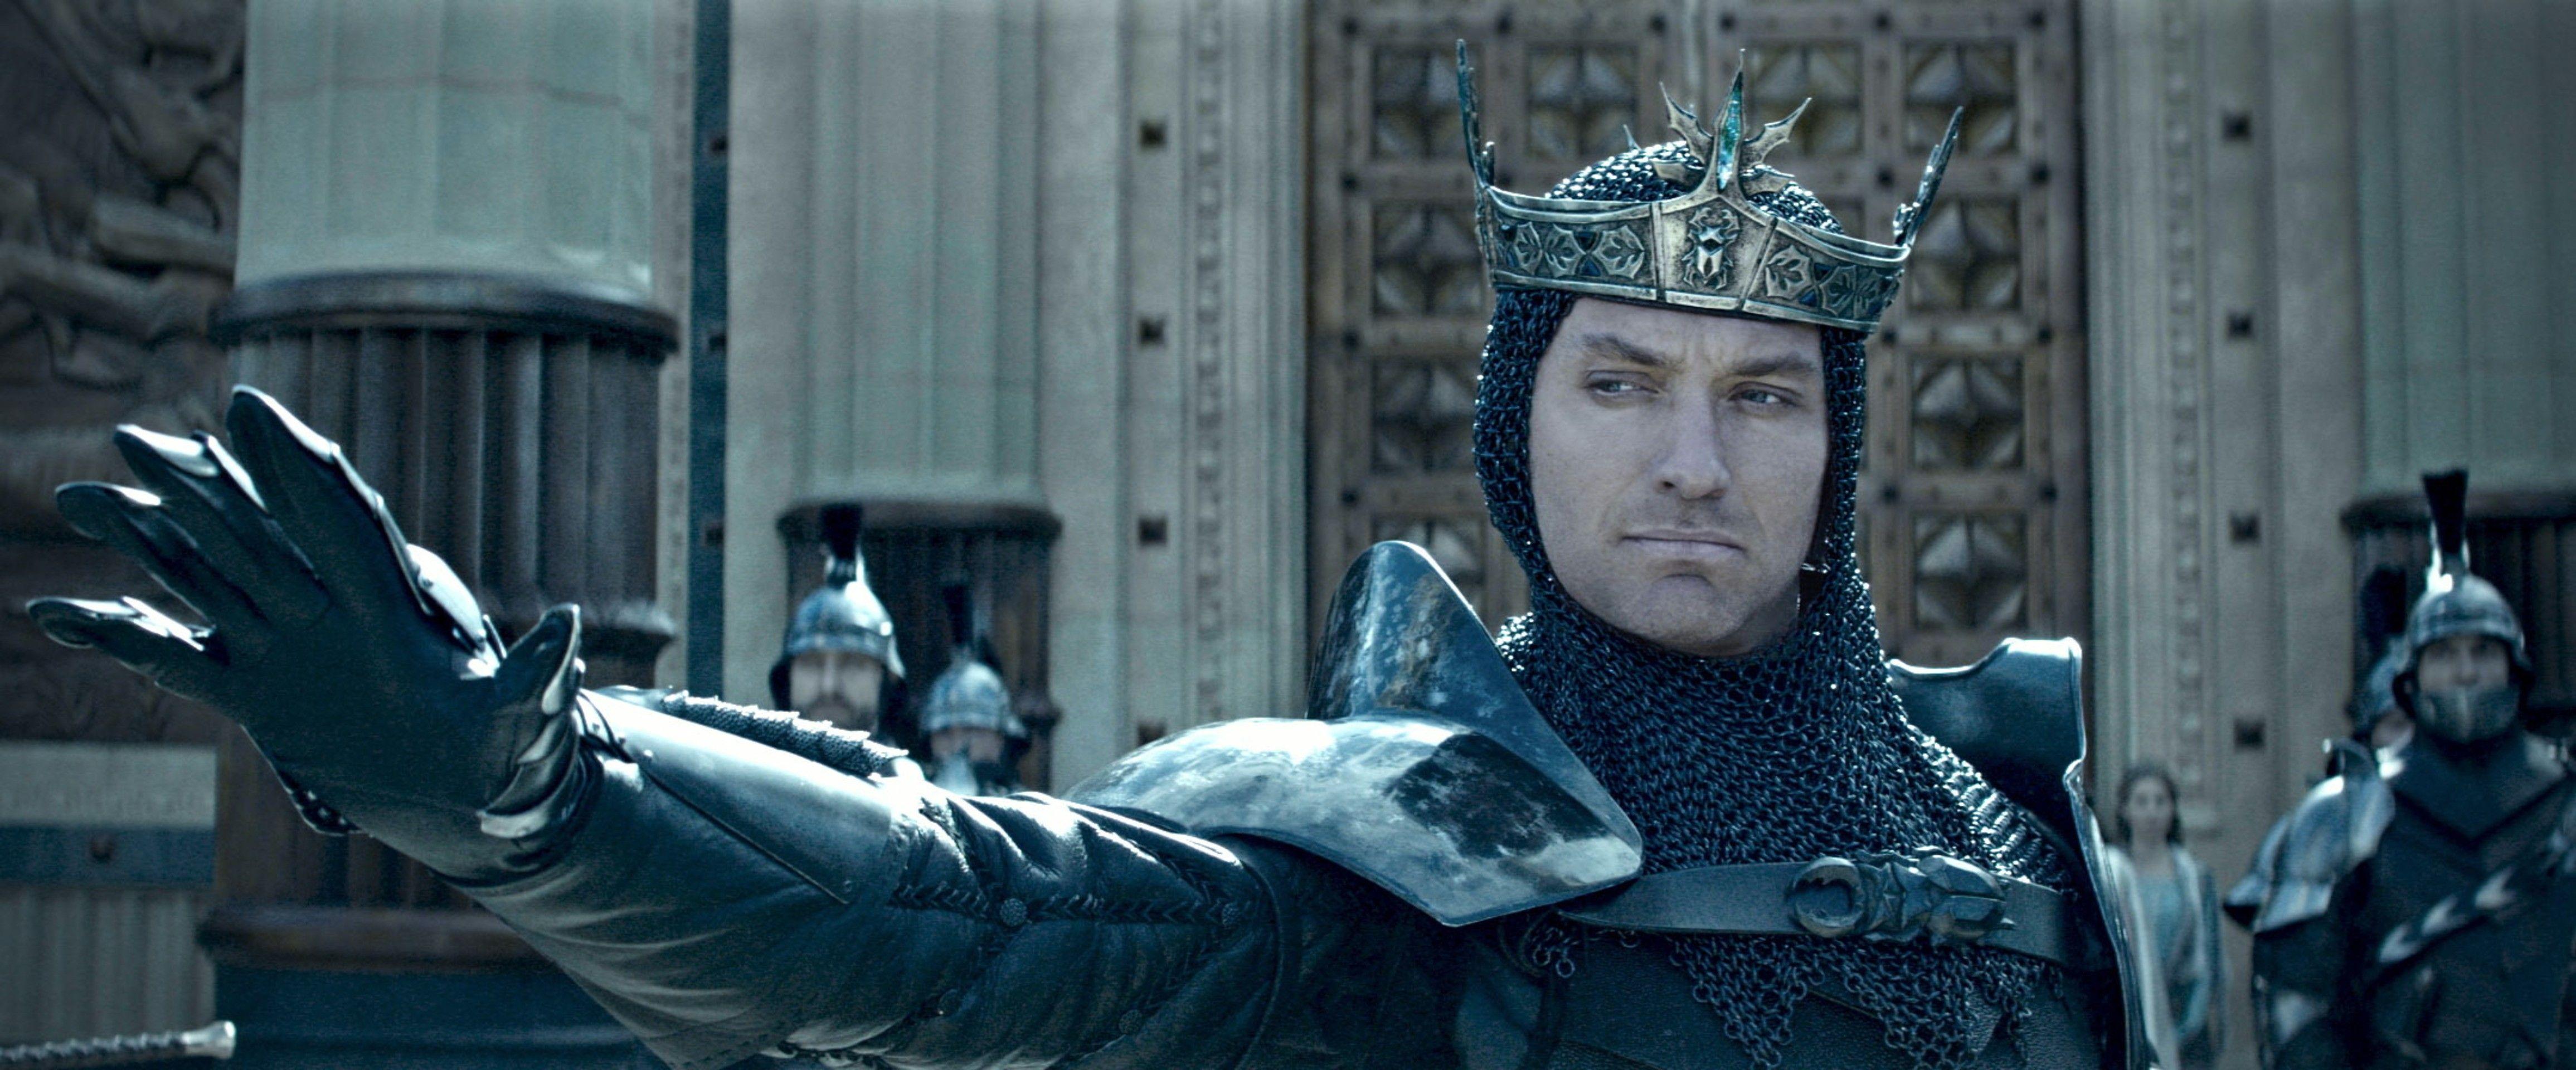 Wallpaper King Arthur Legend of the Sword, Jude Law, best movies